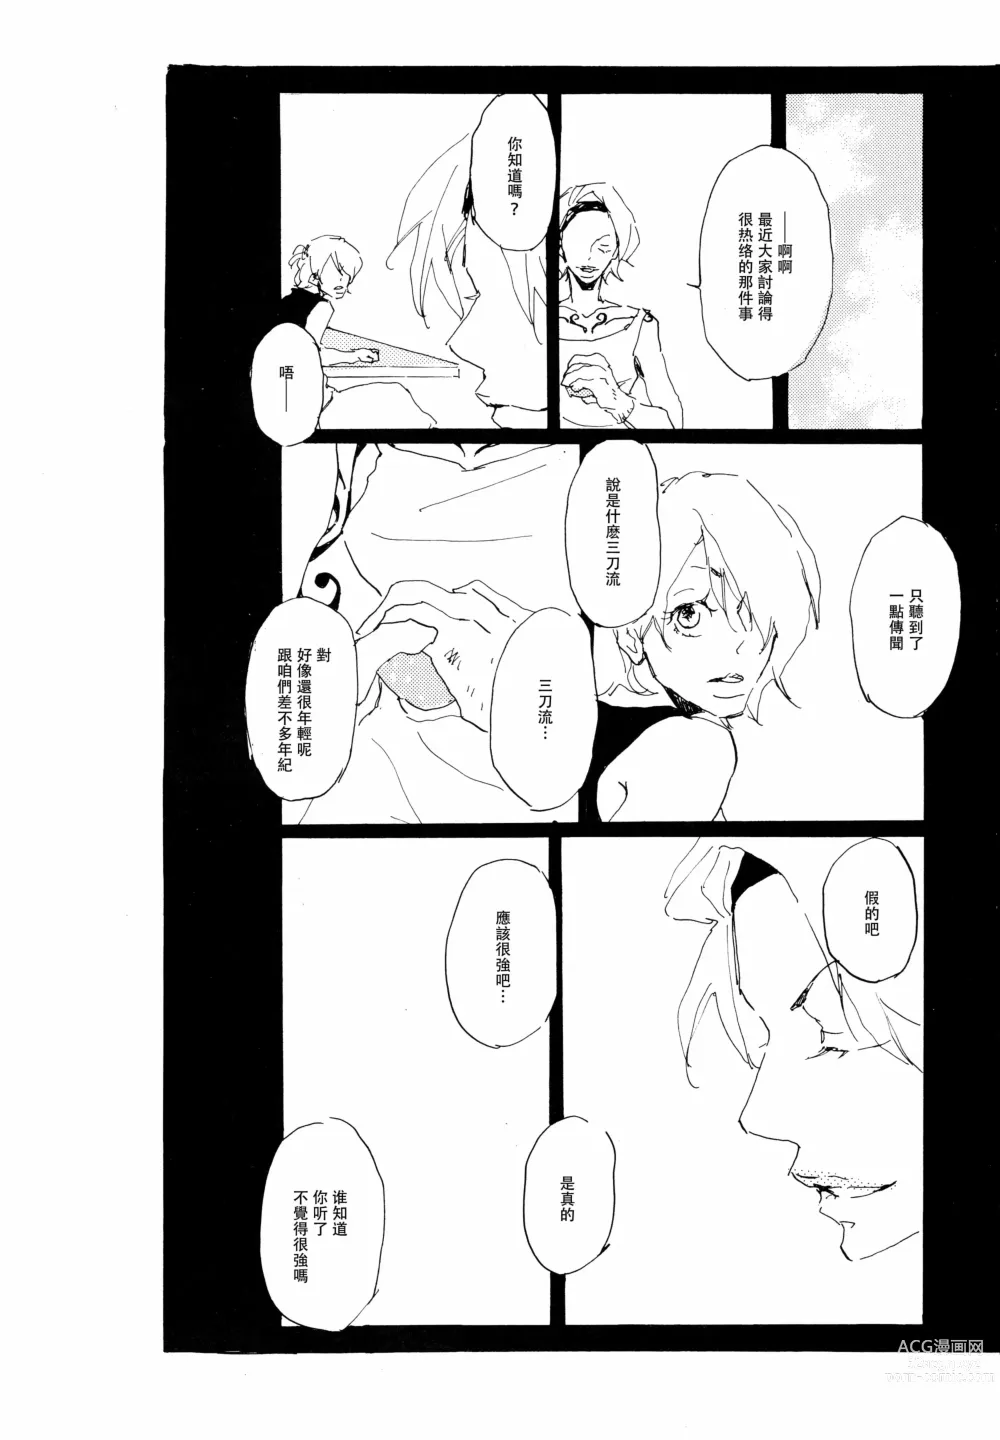 Page 6 of doujinshi 忧郁·与那份没有尽头的悲伤